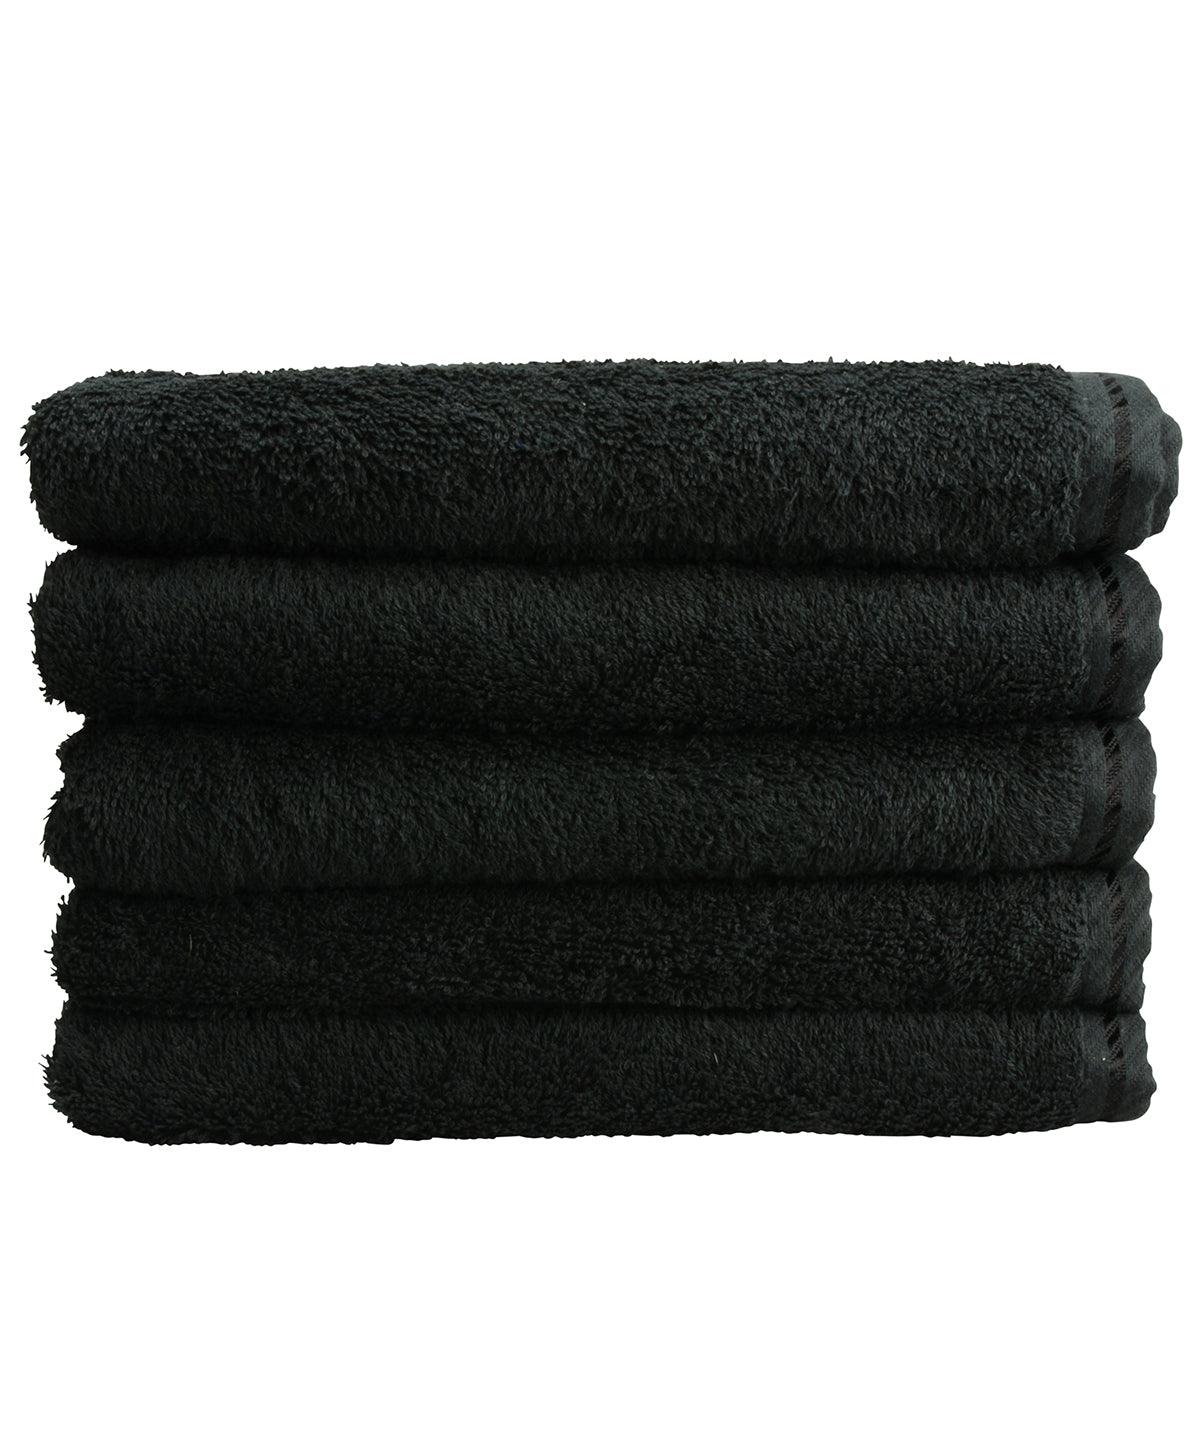 Black - ARTG® Hand towel Towels A&R Towels Gifting & Accessories, Homewares & Towelling Schoolwear Centres